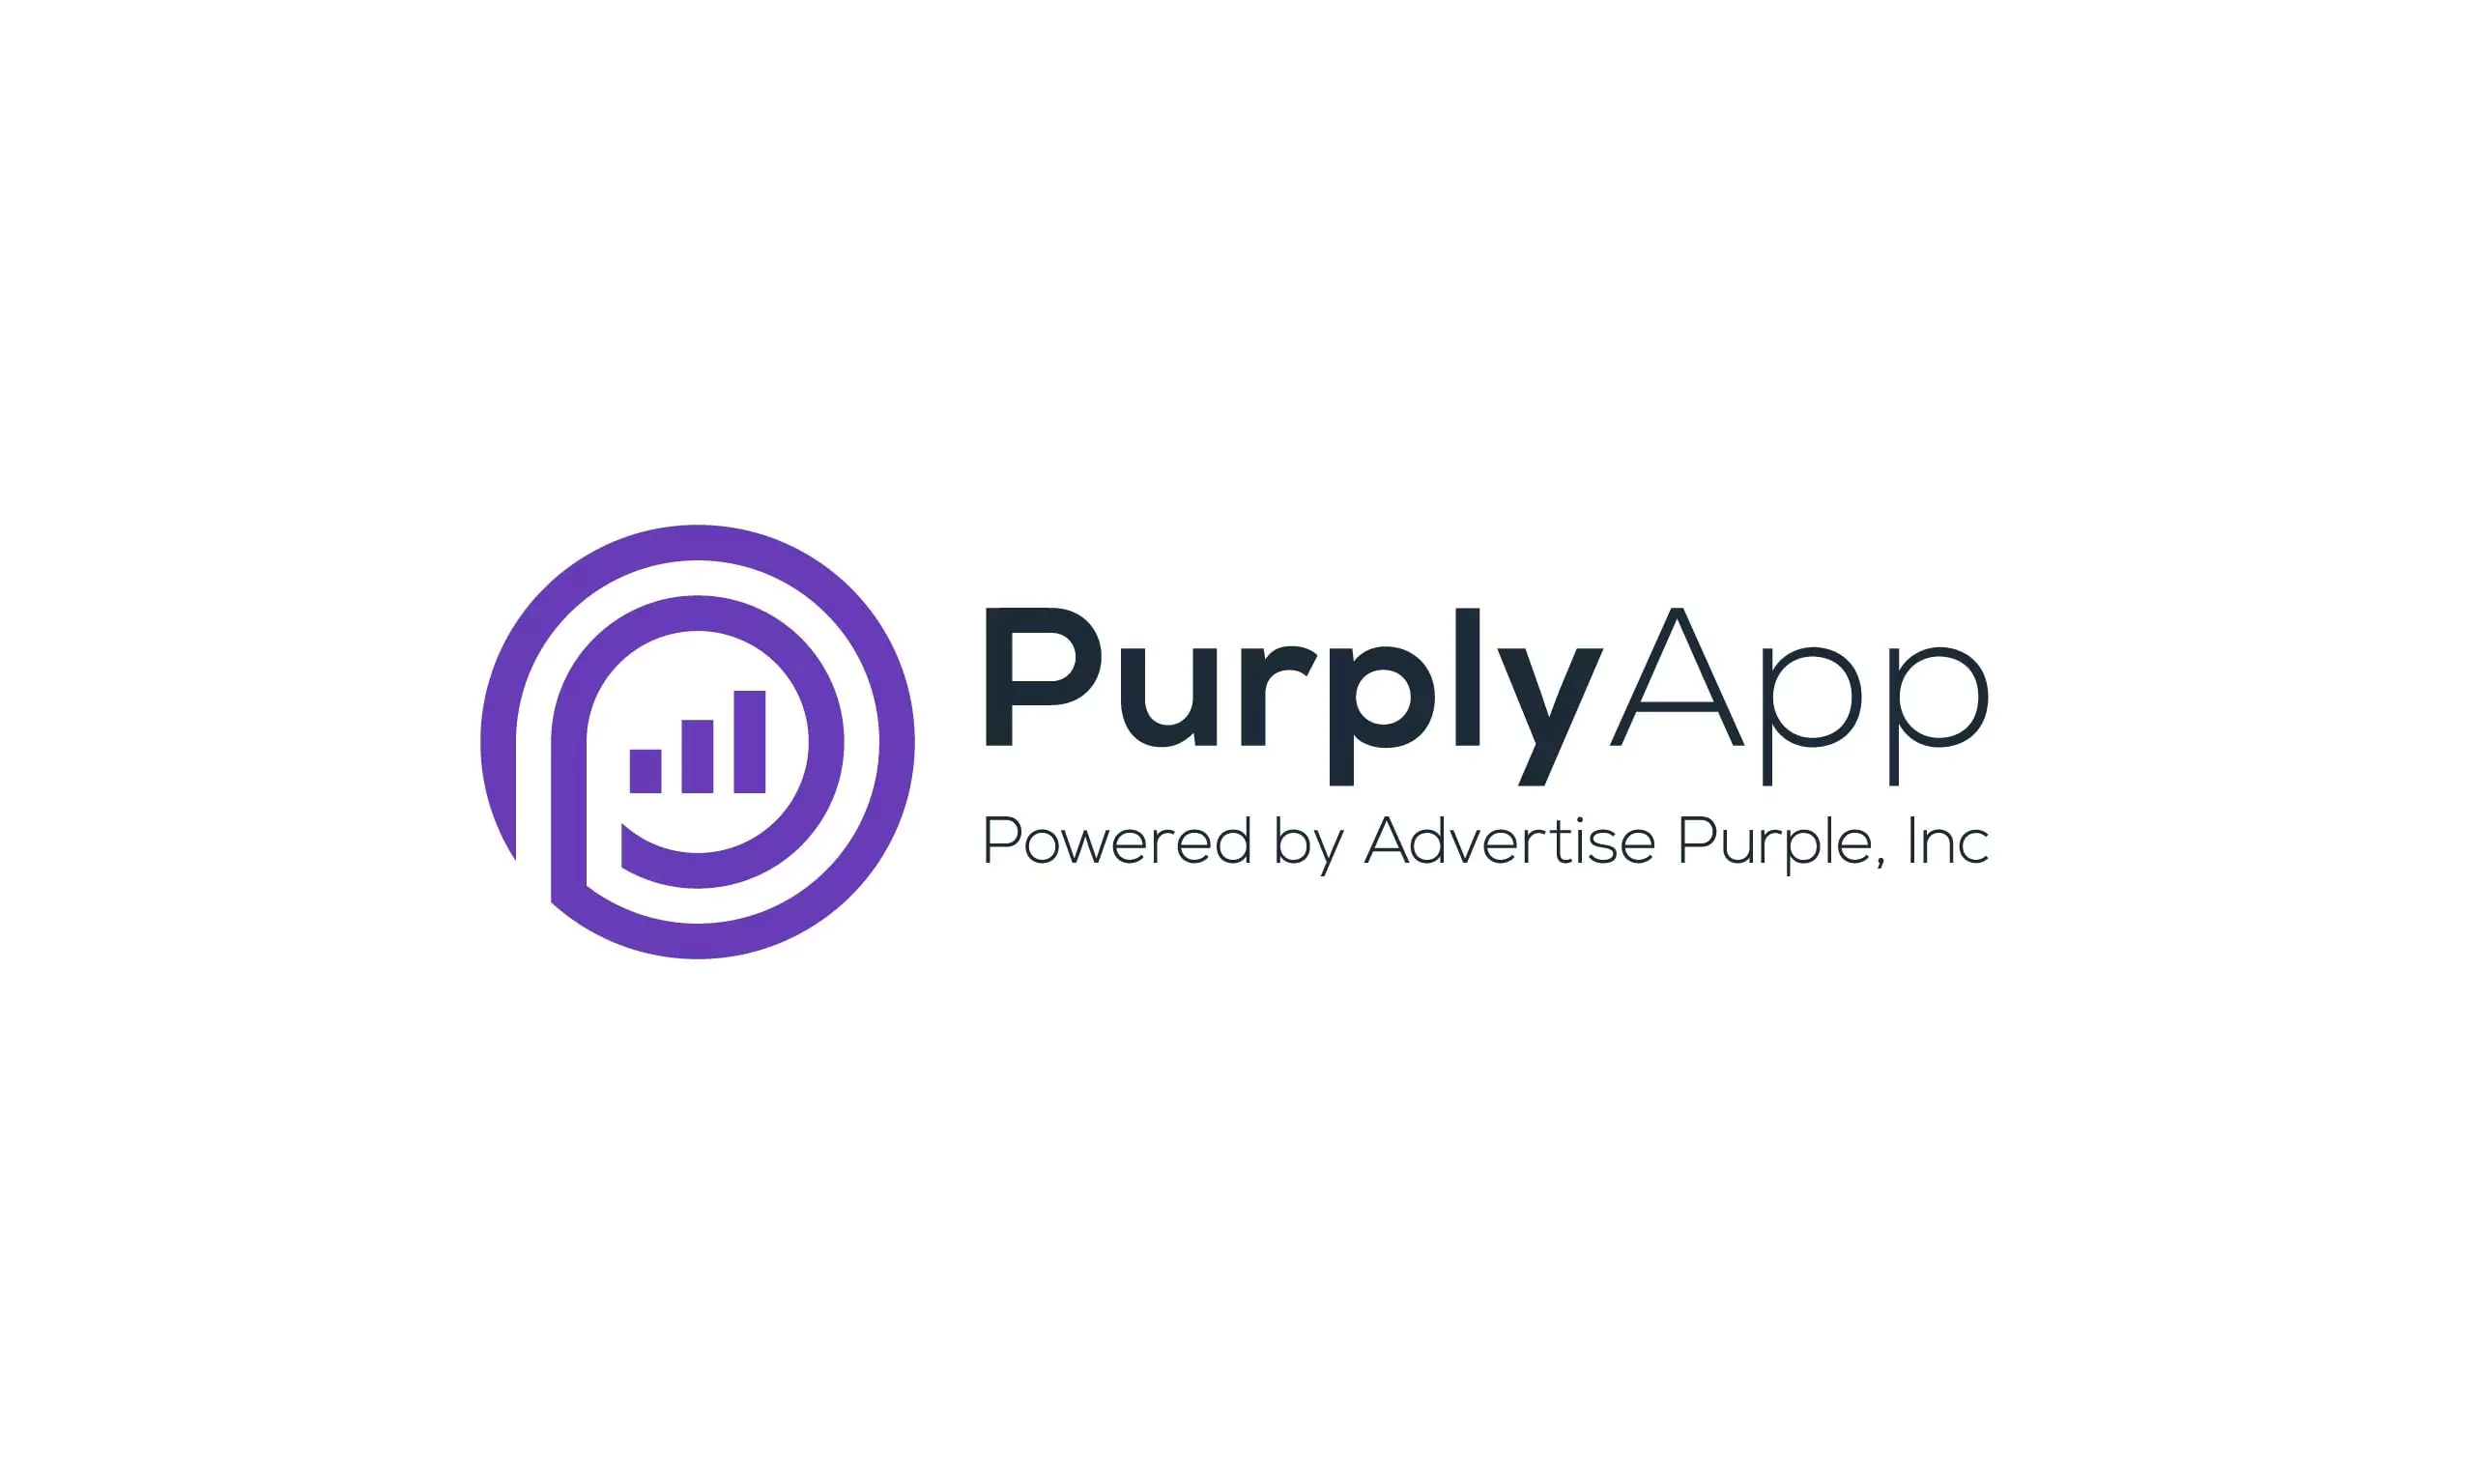 PurplyApp logo